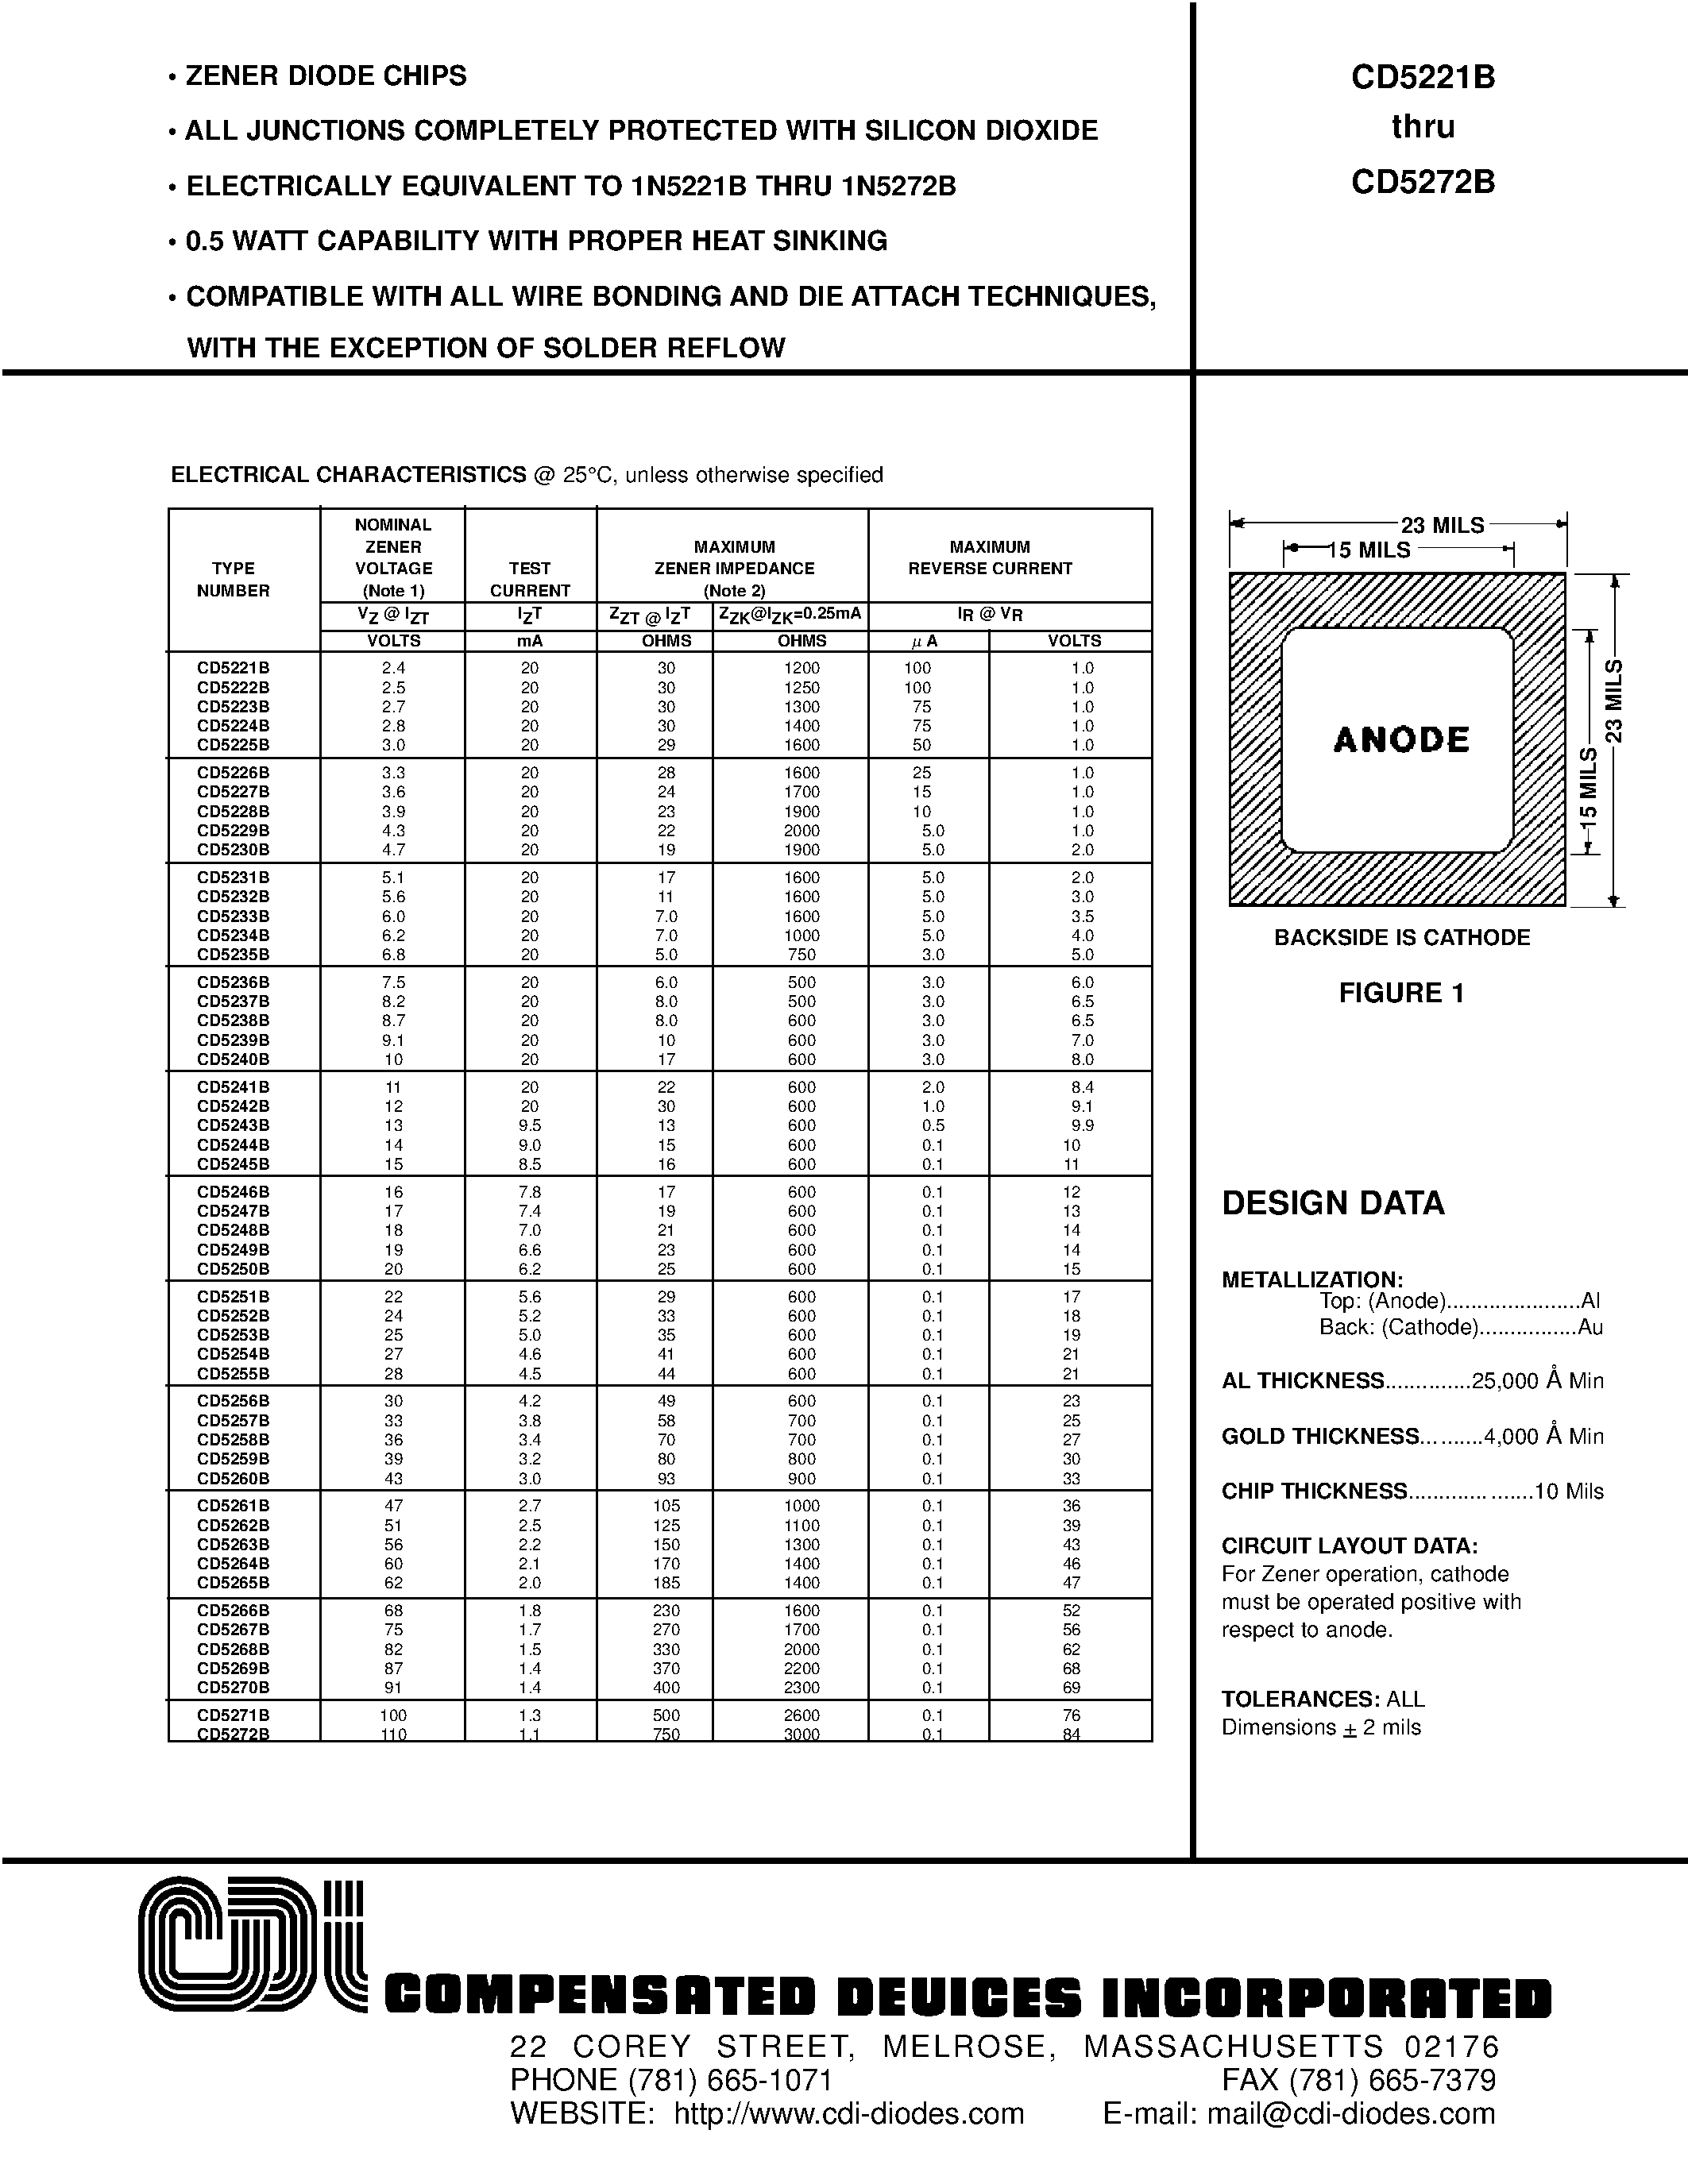 Datasheet CD5222B - ZENER DIODE CHIPS page 1